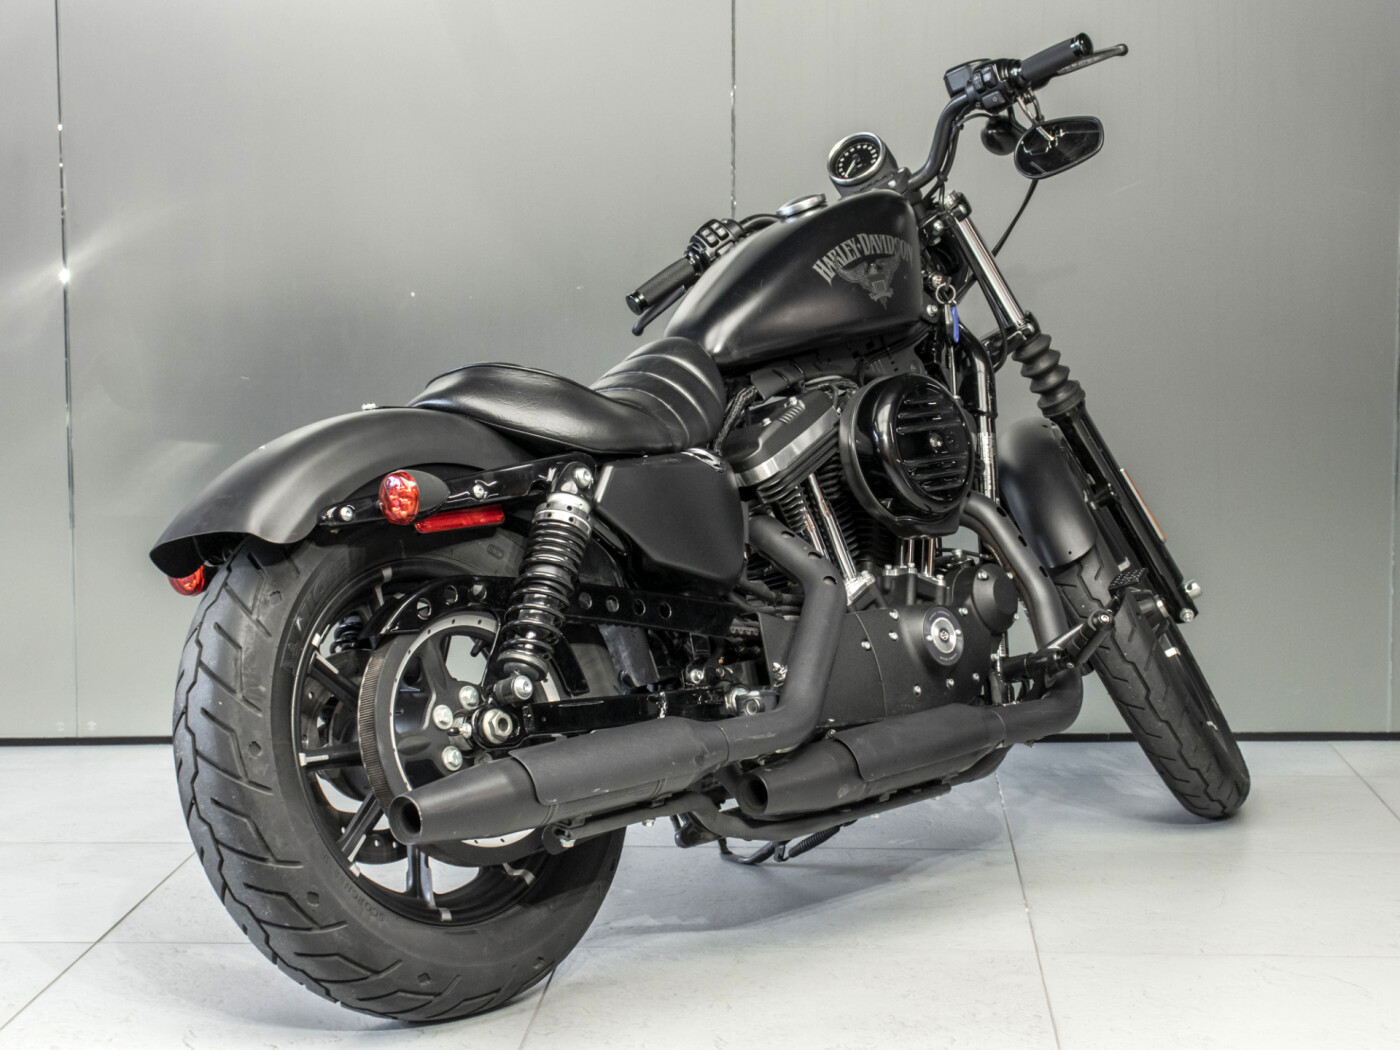 Harley-Davidson Sportster XL 883 #0675